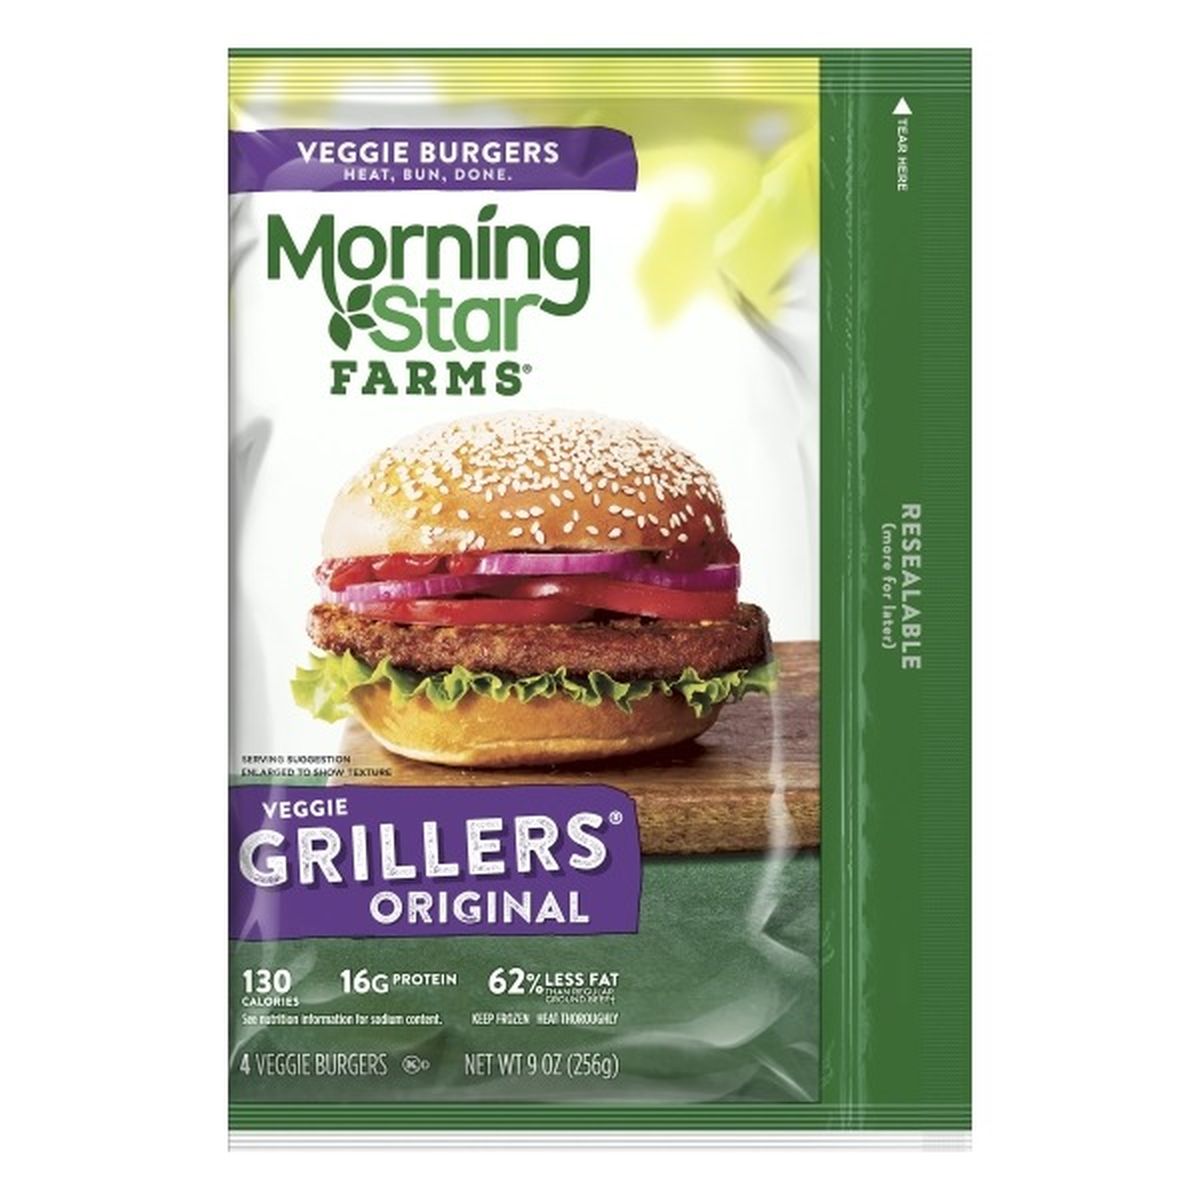 Calories in Morning Star Farms Veggie Burgers, Veggie Grillers Original